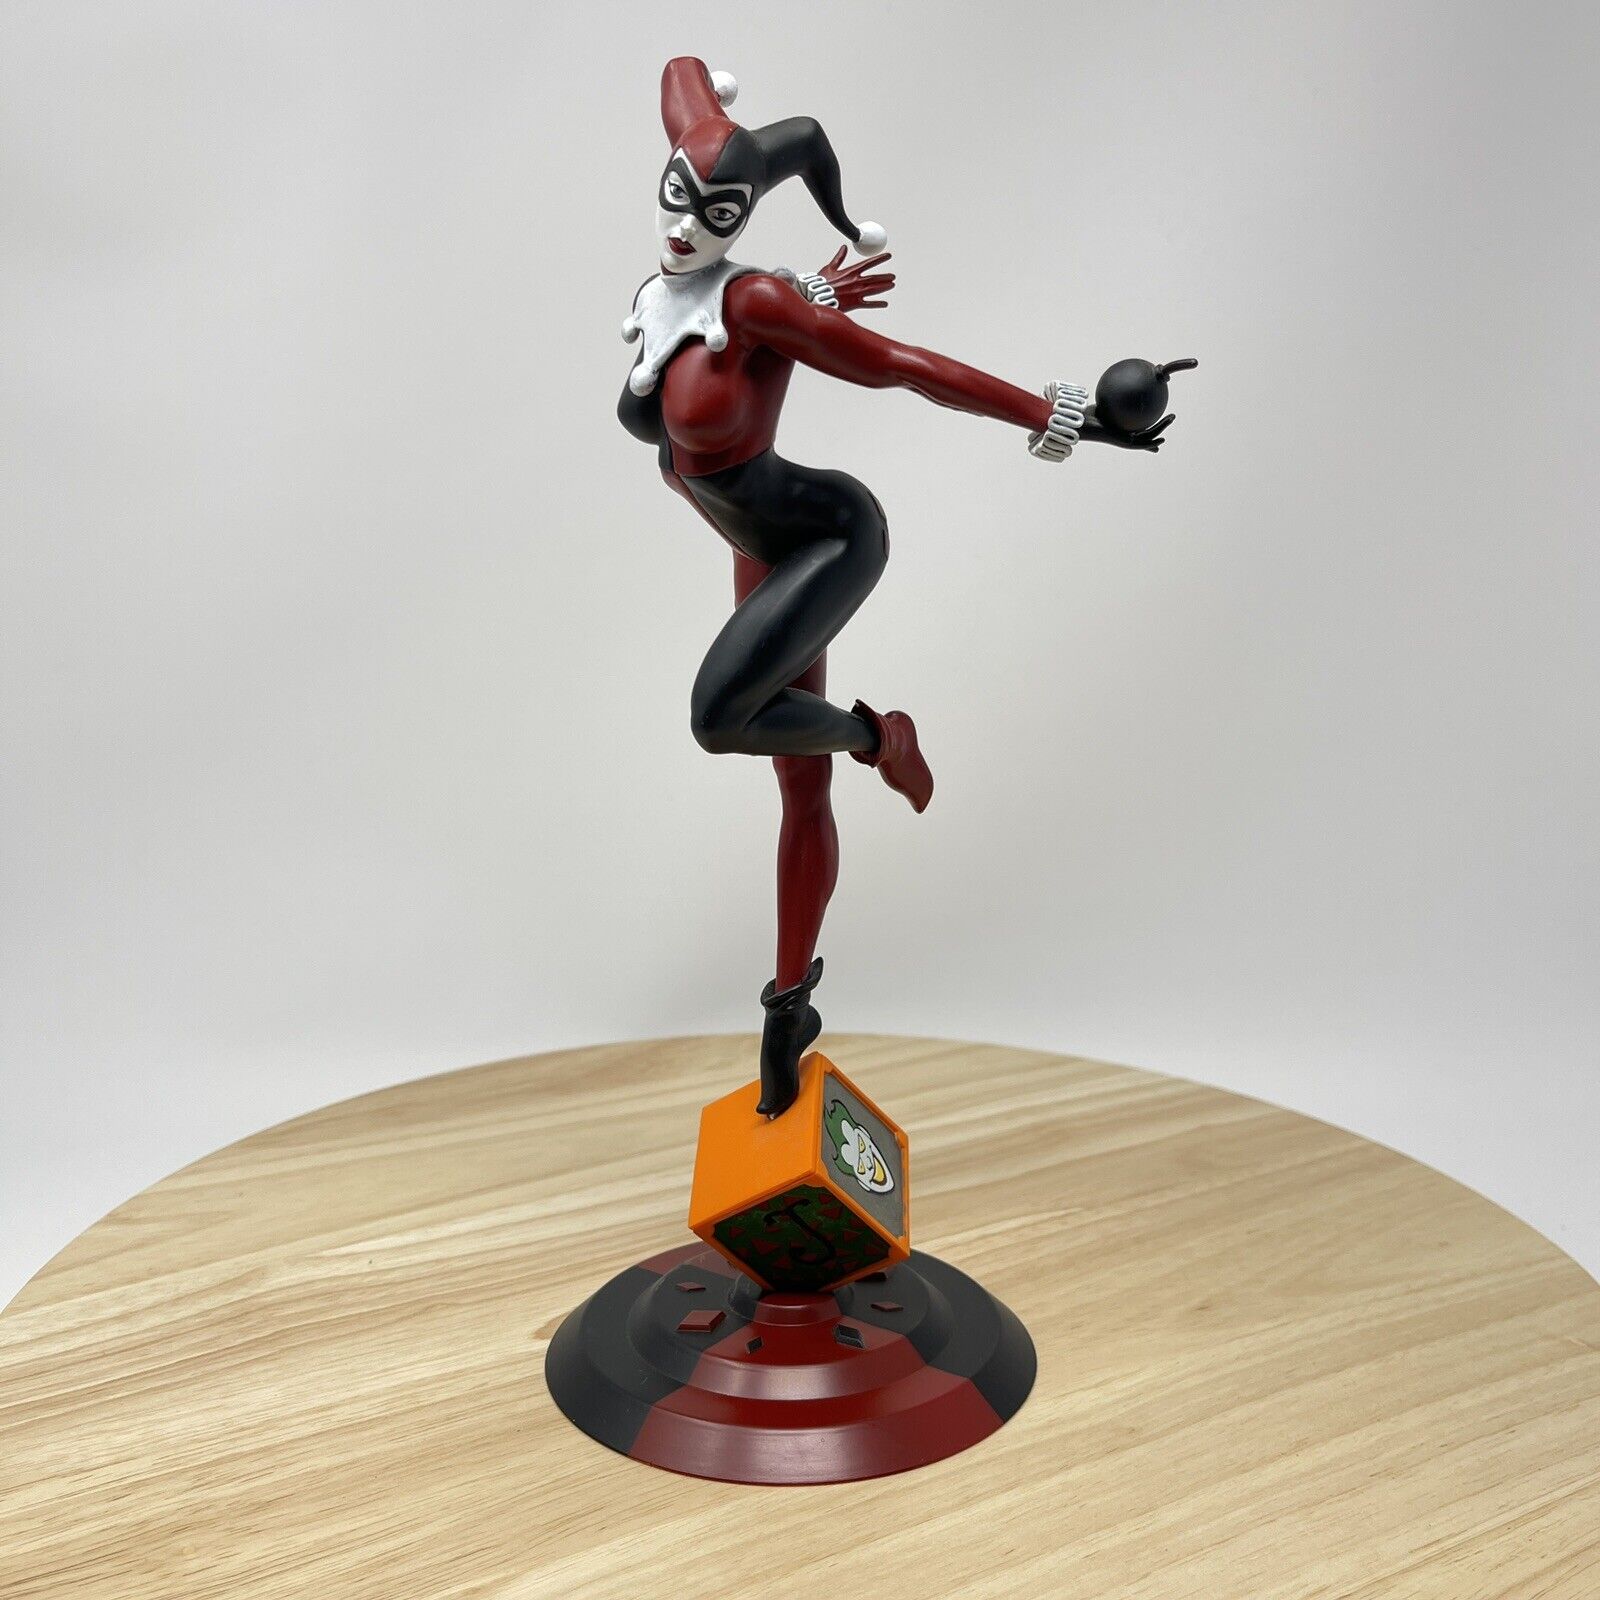 2019 Diamond Select DC Gallery HARLEY QUINN Statue Figure Gamestop Exclusive 10”